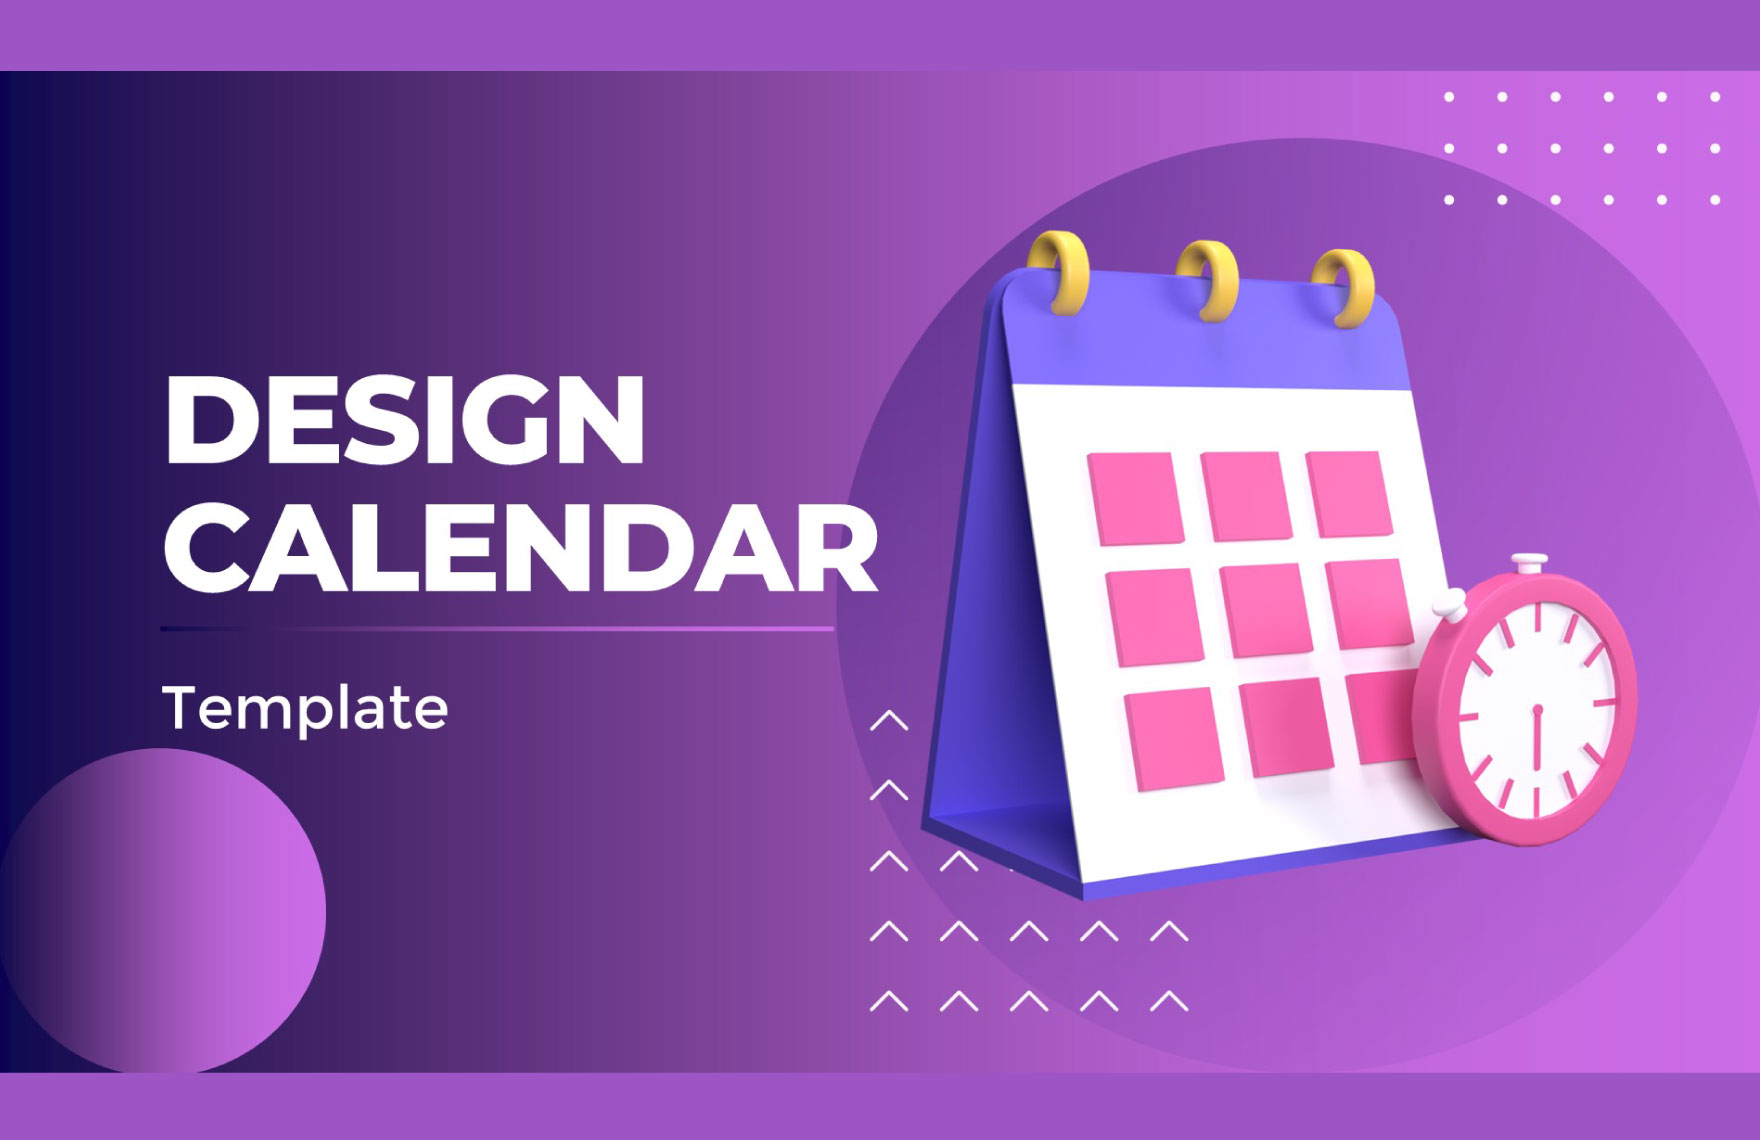 Design Calendar Template